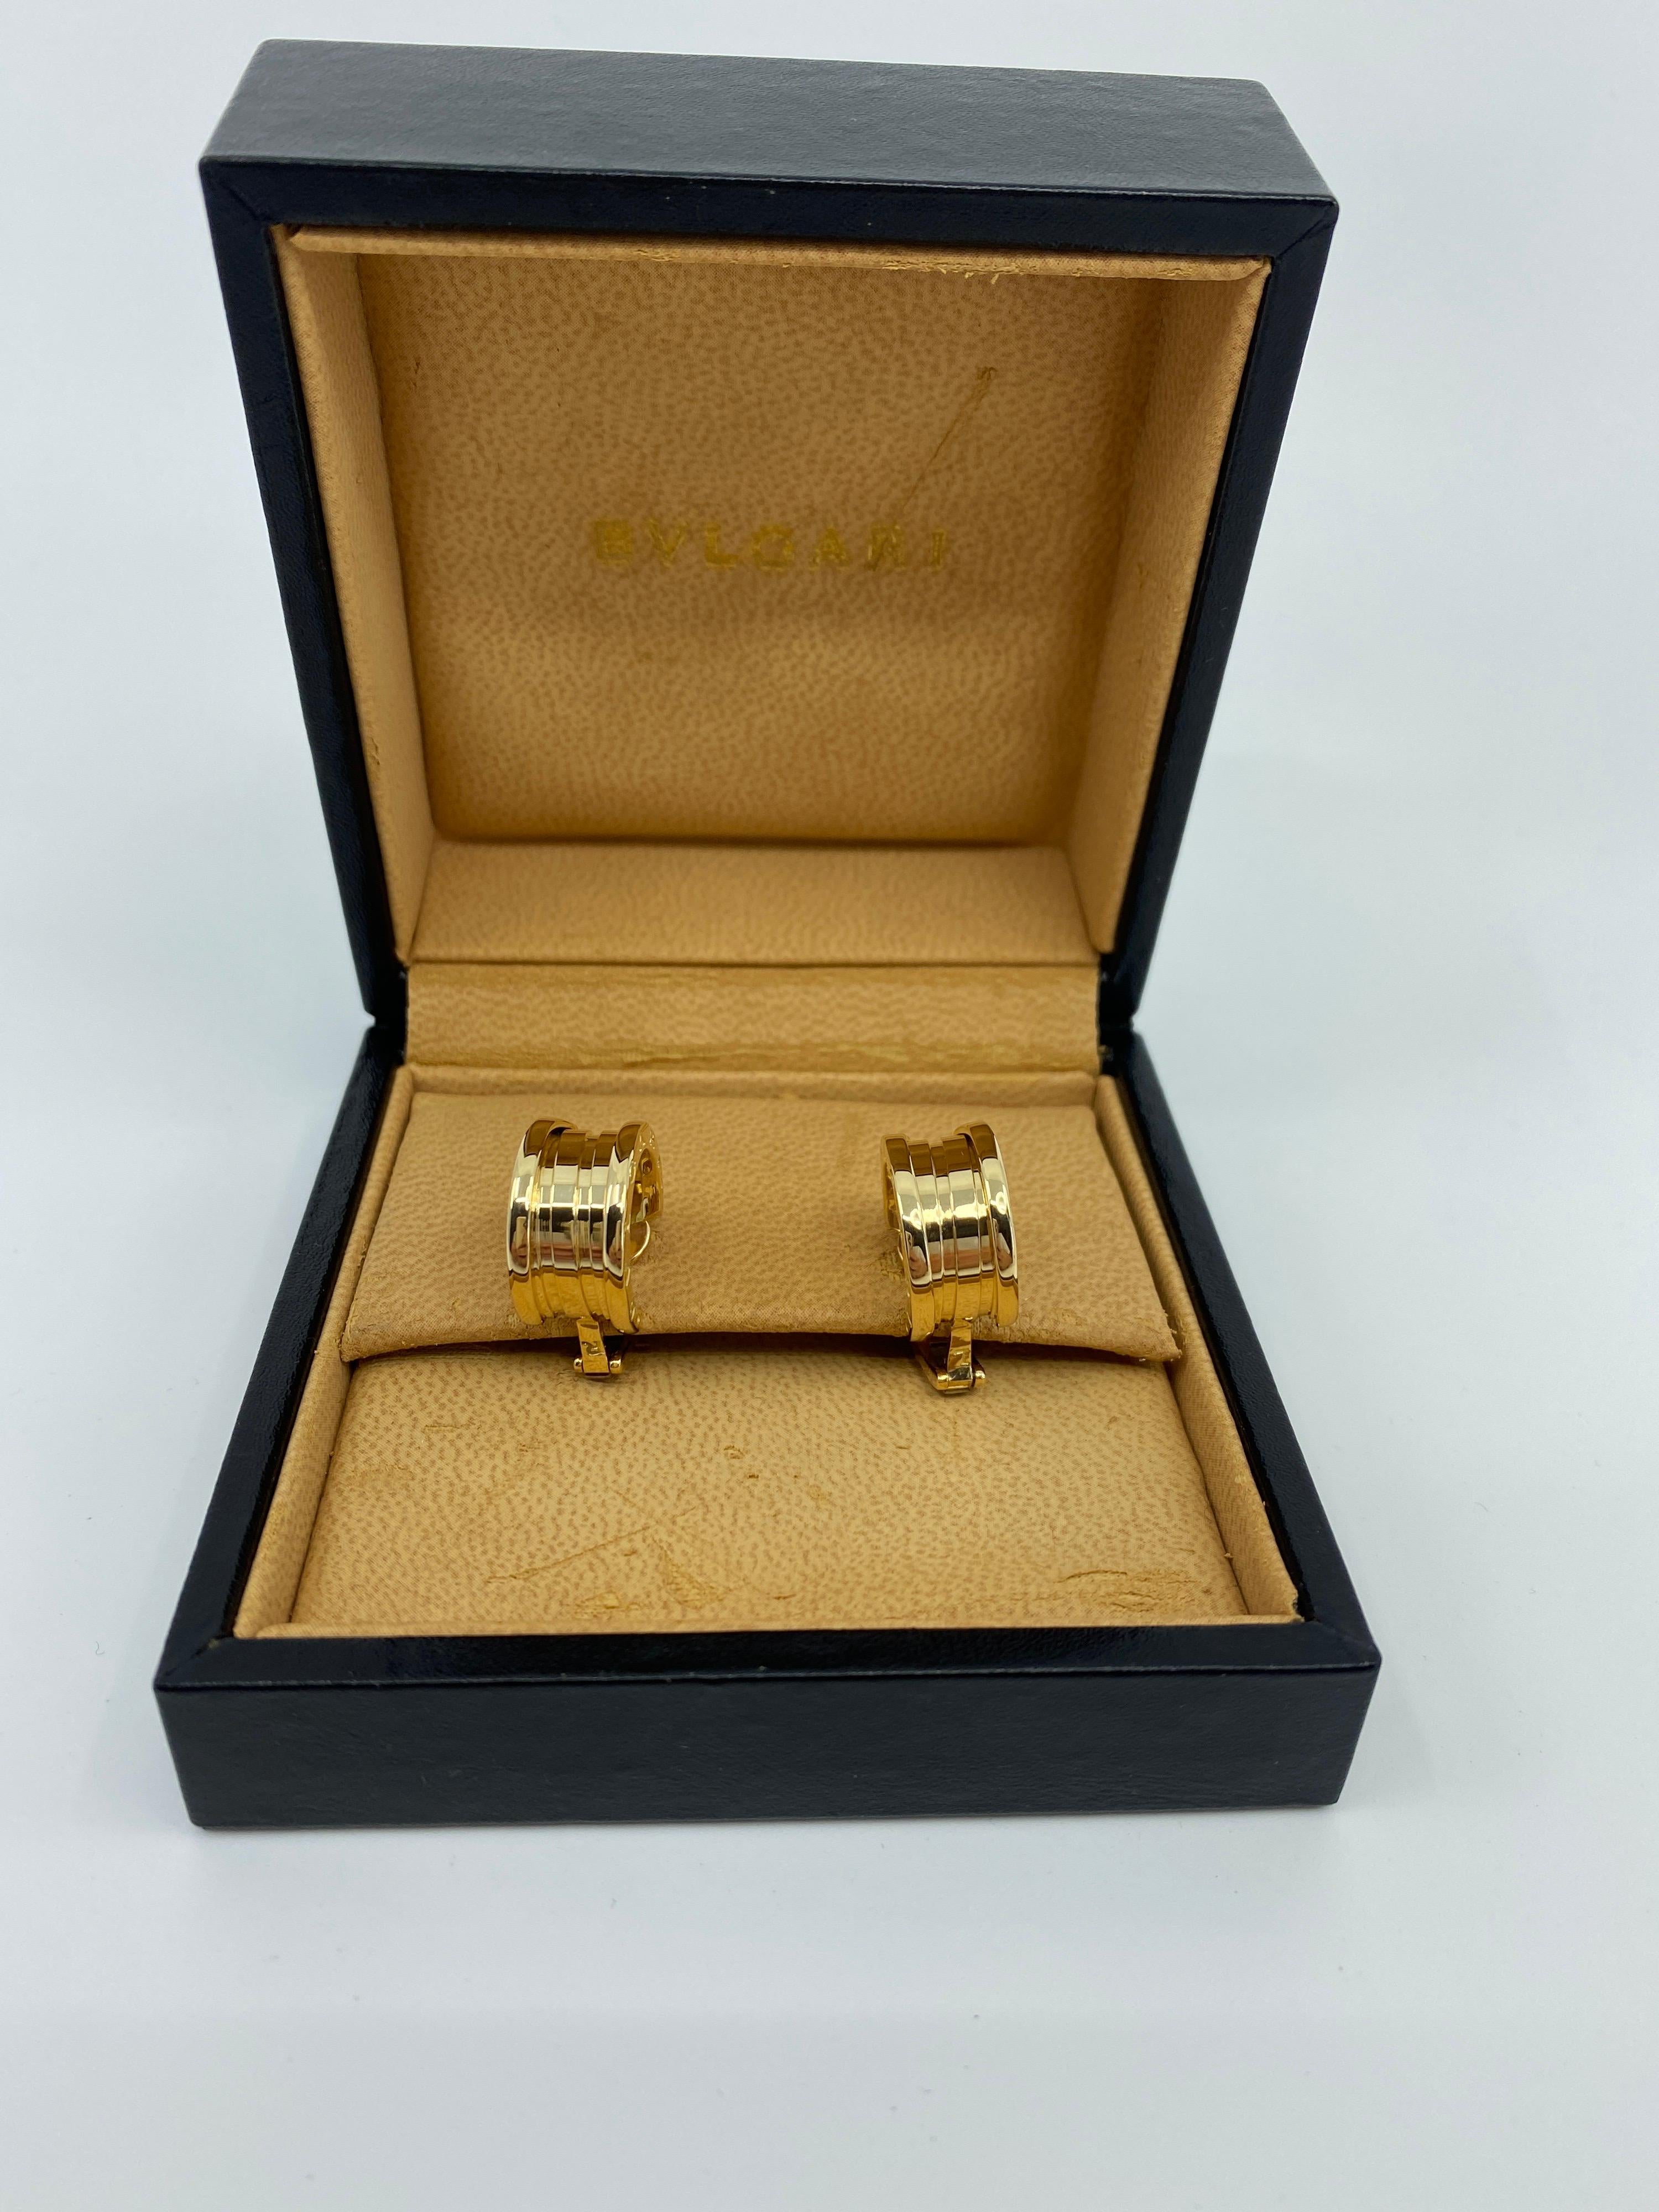 Bvlgari Bulgari B.Zero1 18 Karat Yellow Gold Hoop Stud Earrings with Box 1